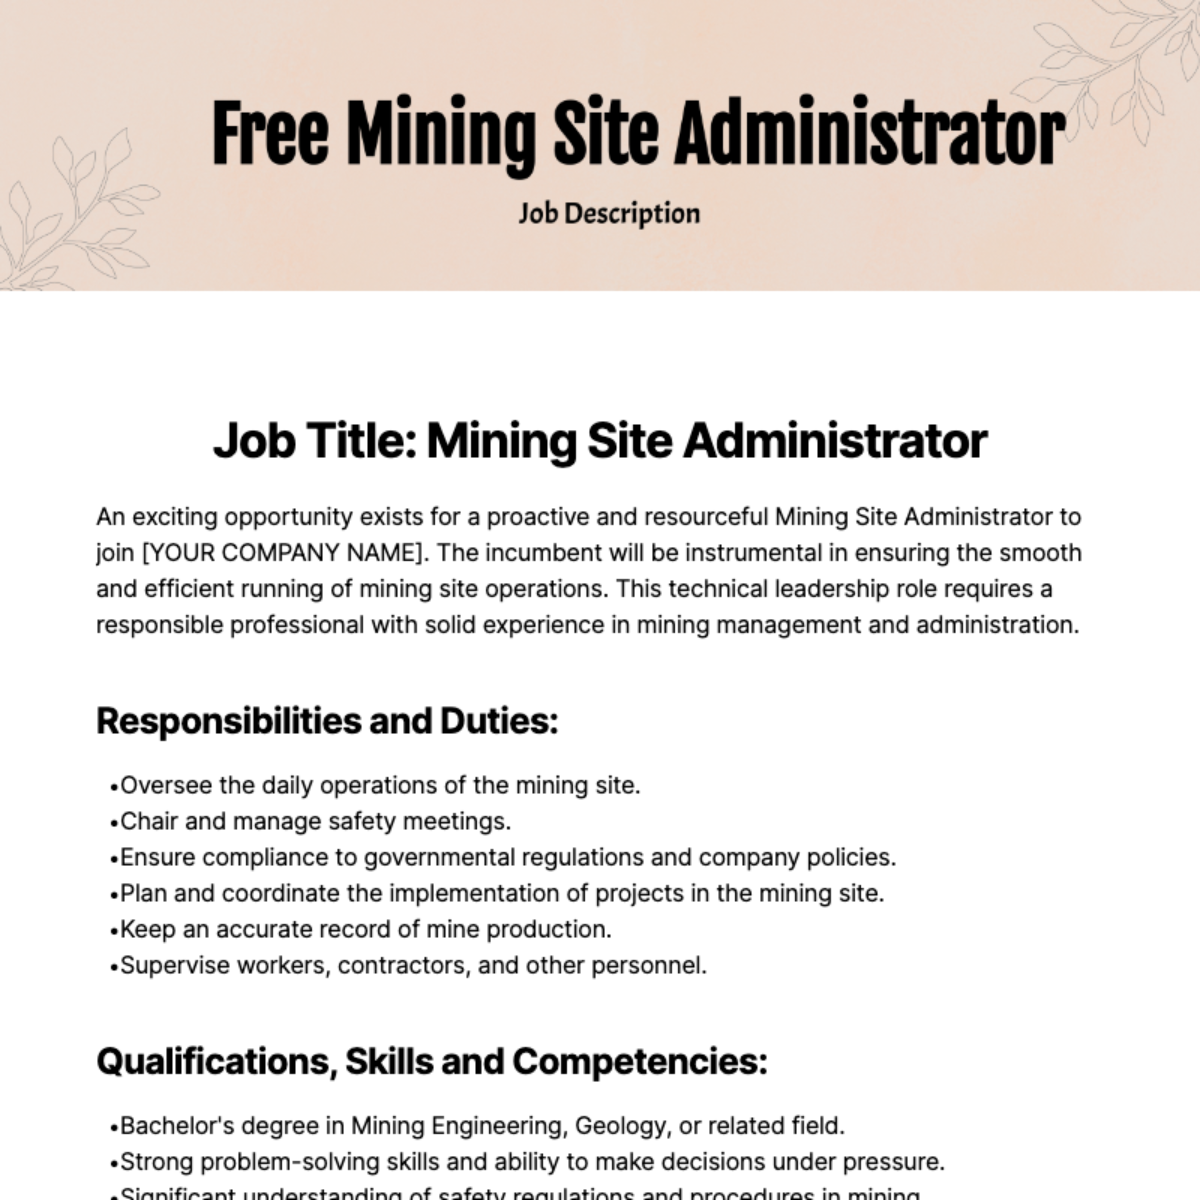 Free Mining Site Administrator Job Description Template